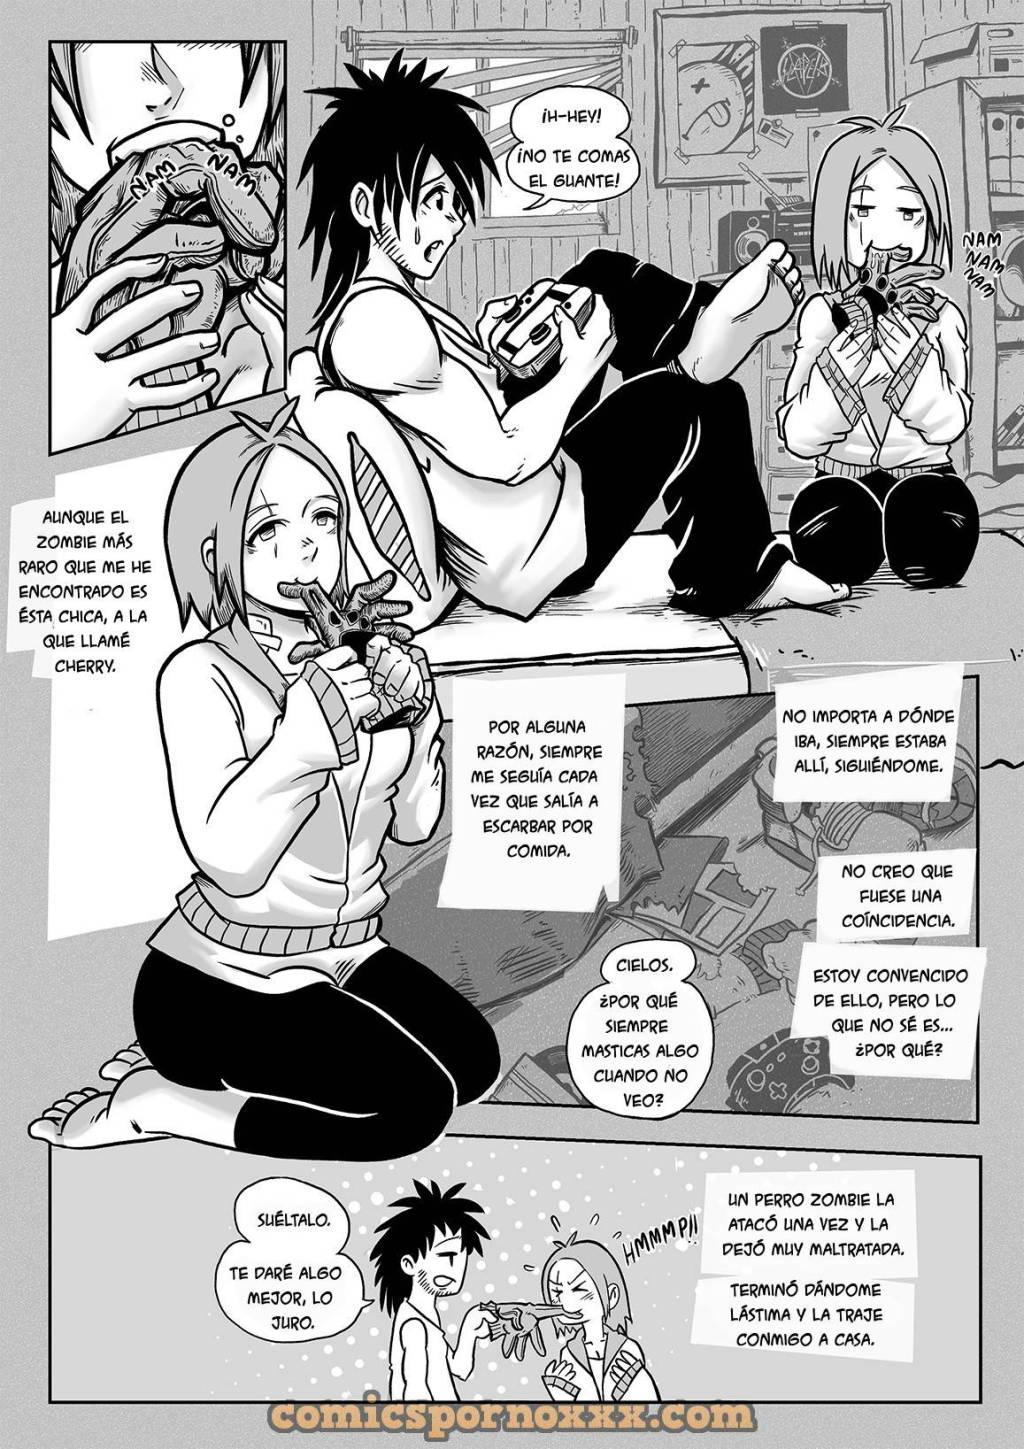 A Zombie Fell for me - 4 - Comics Porno - Hentai Manga - Cartoon XXX